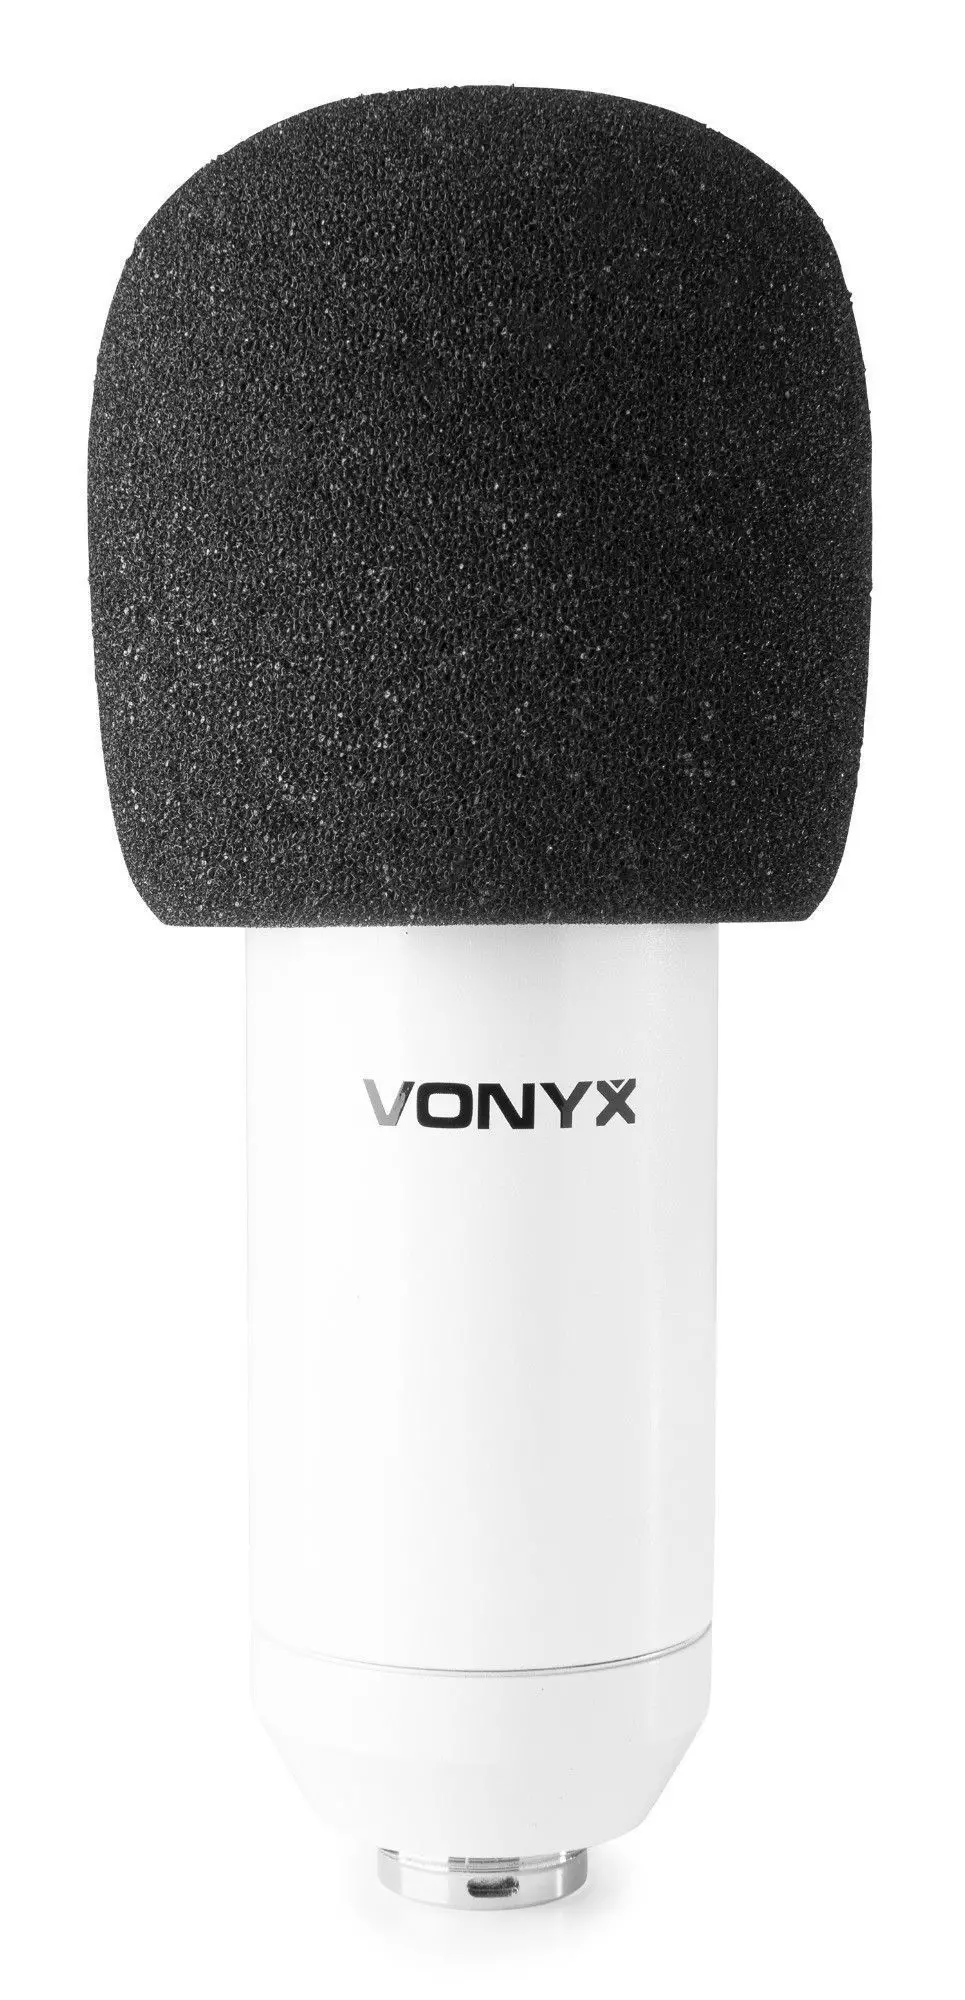 Retourdeal vonyx cm300w usb studio condensator microfoon wit 5